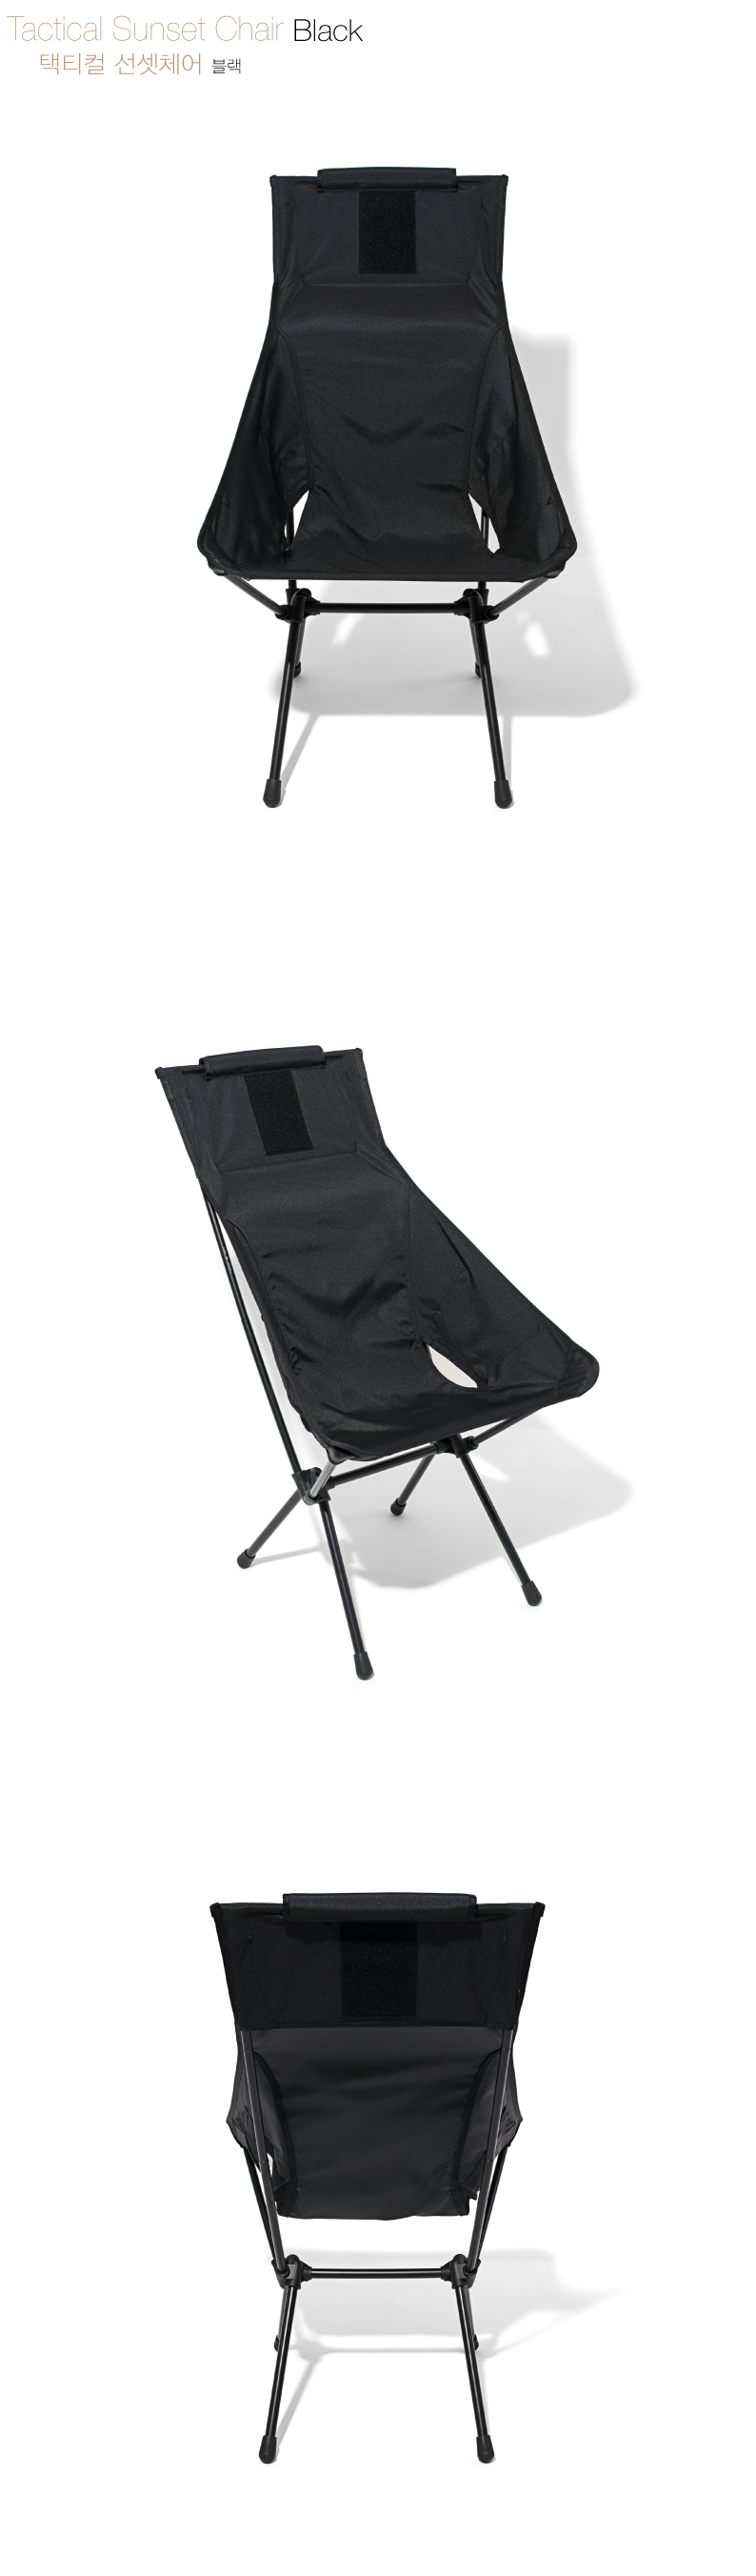 20170512Tactical-sunset-chair-ǰ_black-1.jpg